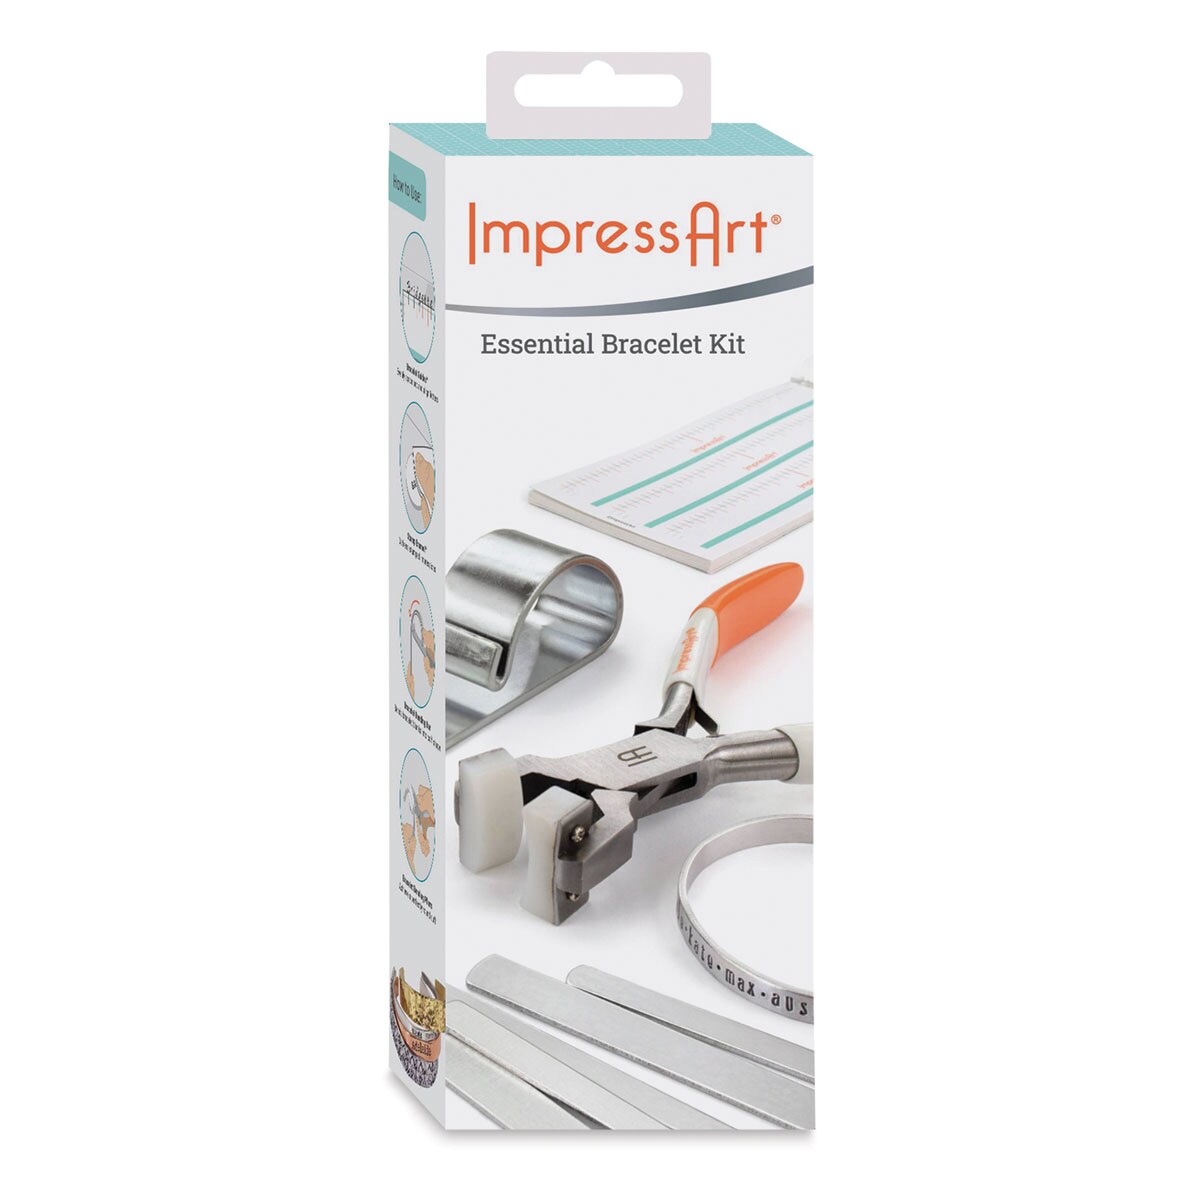 ImpressArt Essential Bracelet Kit